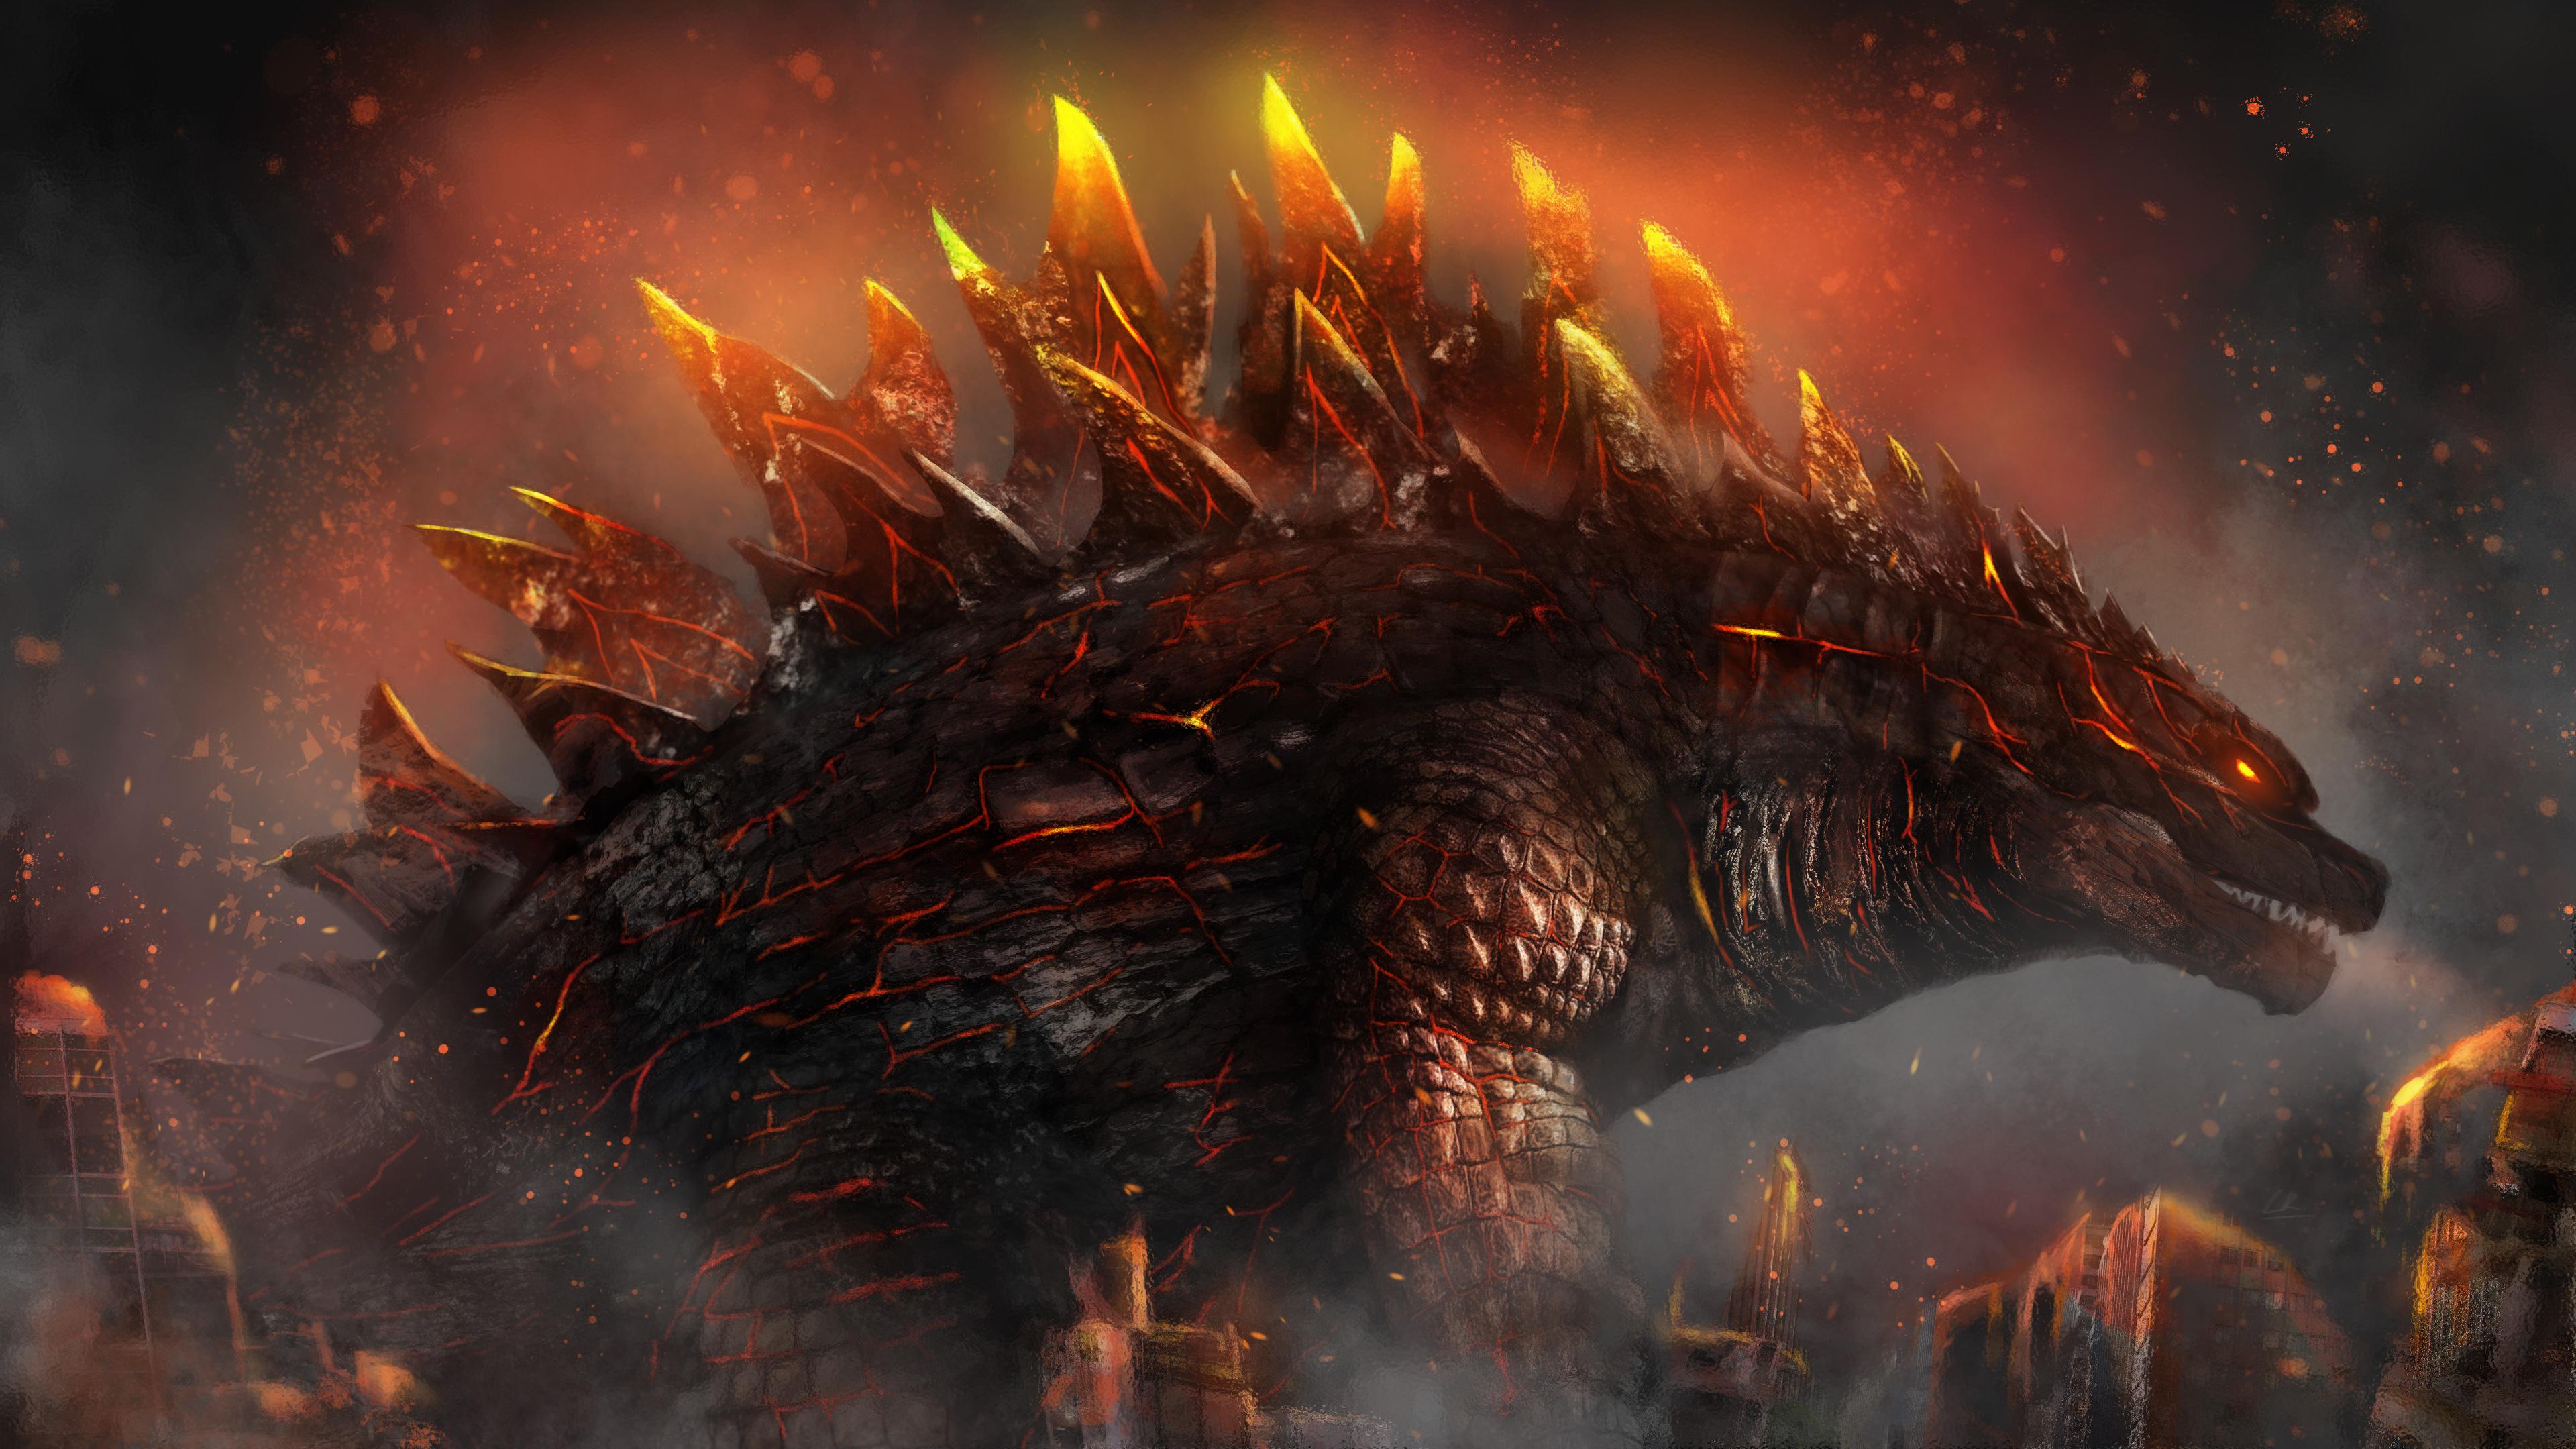 Thermonuclear / Fire Godzilla